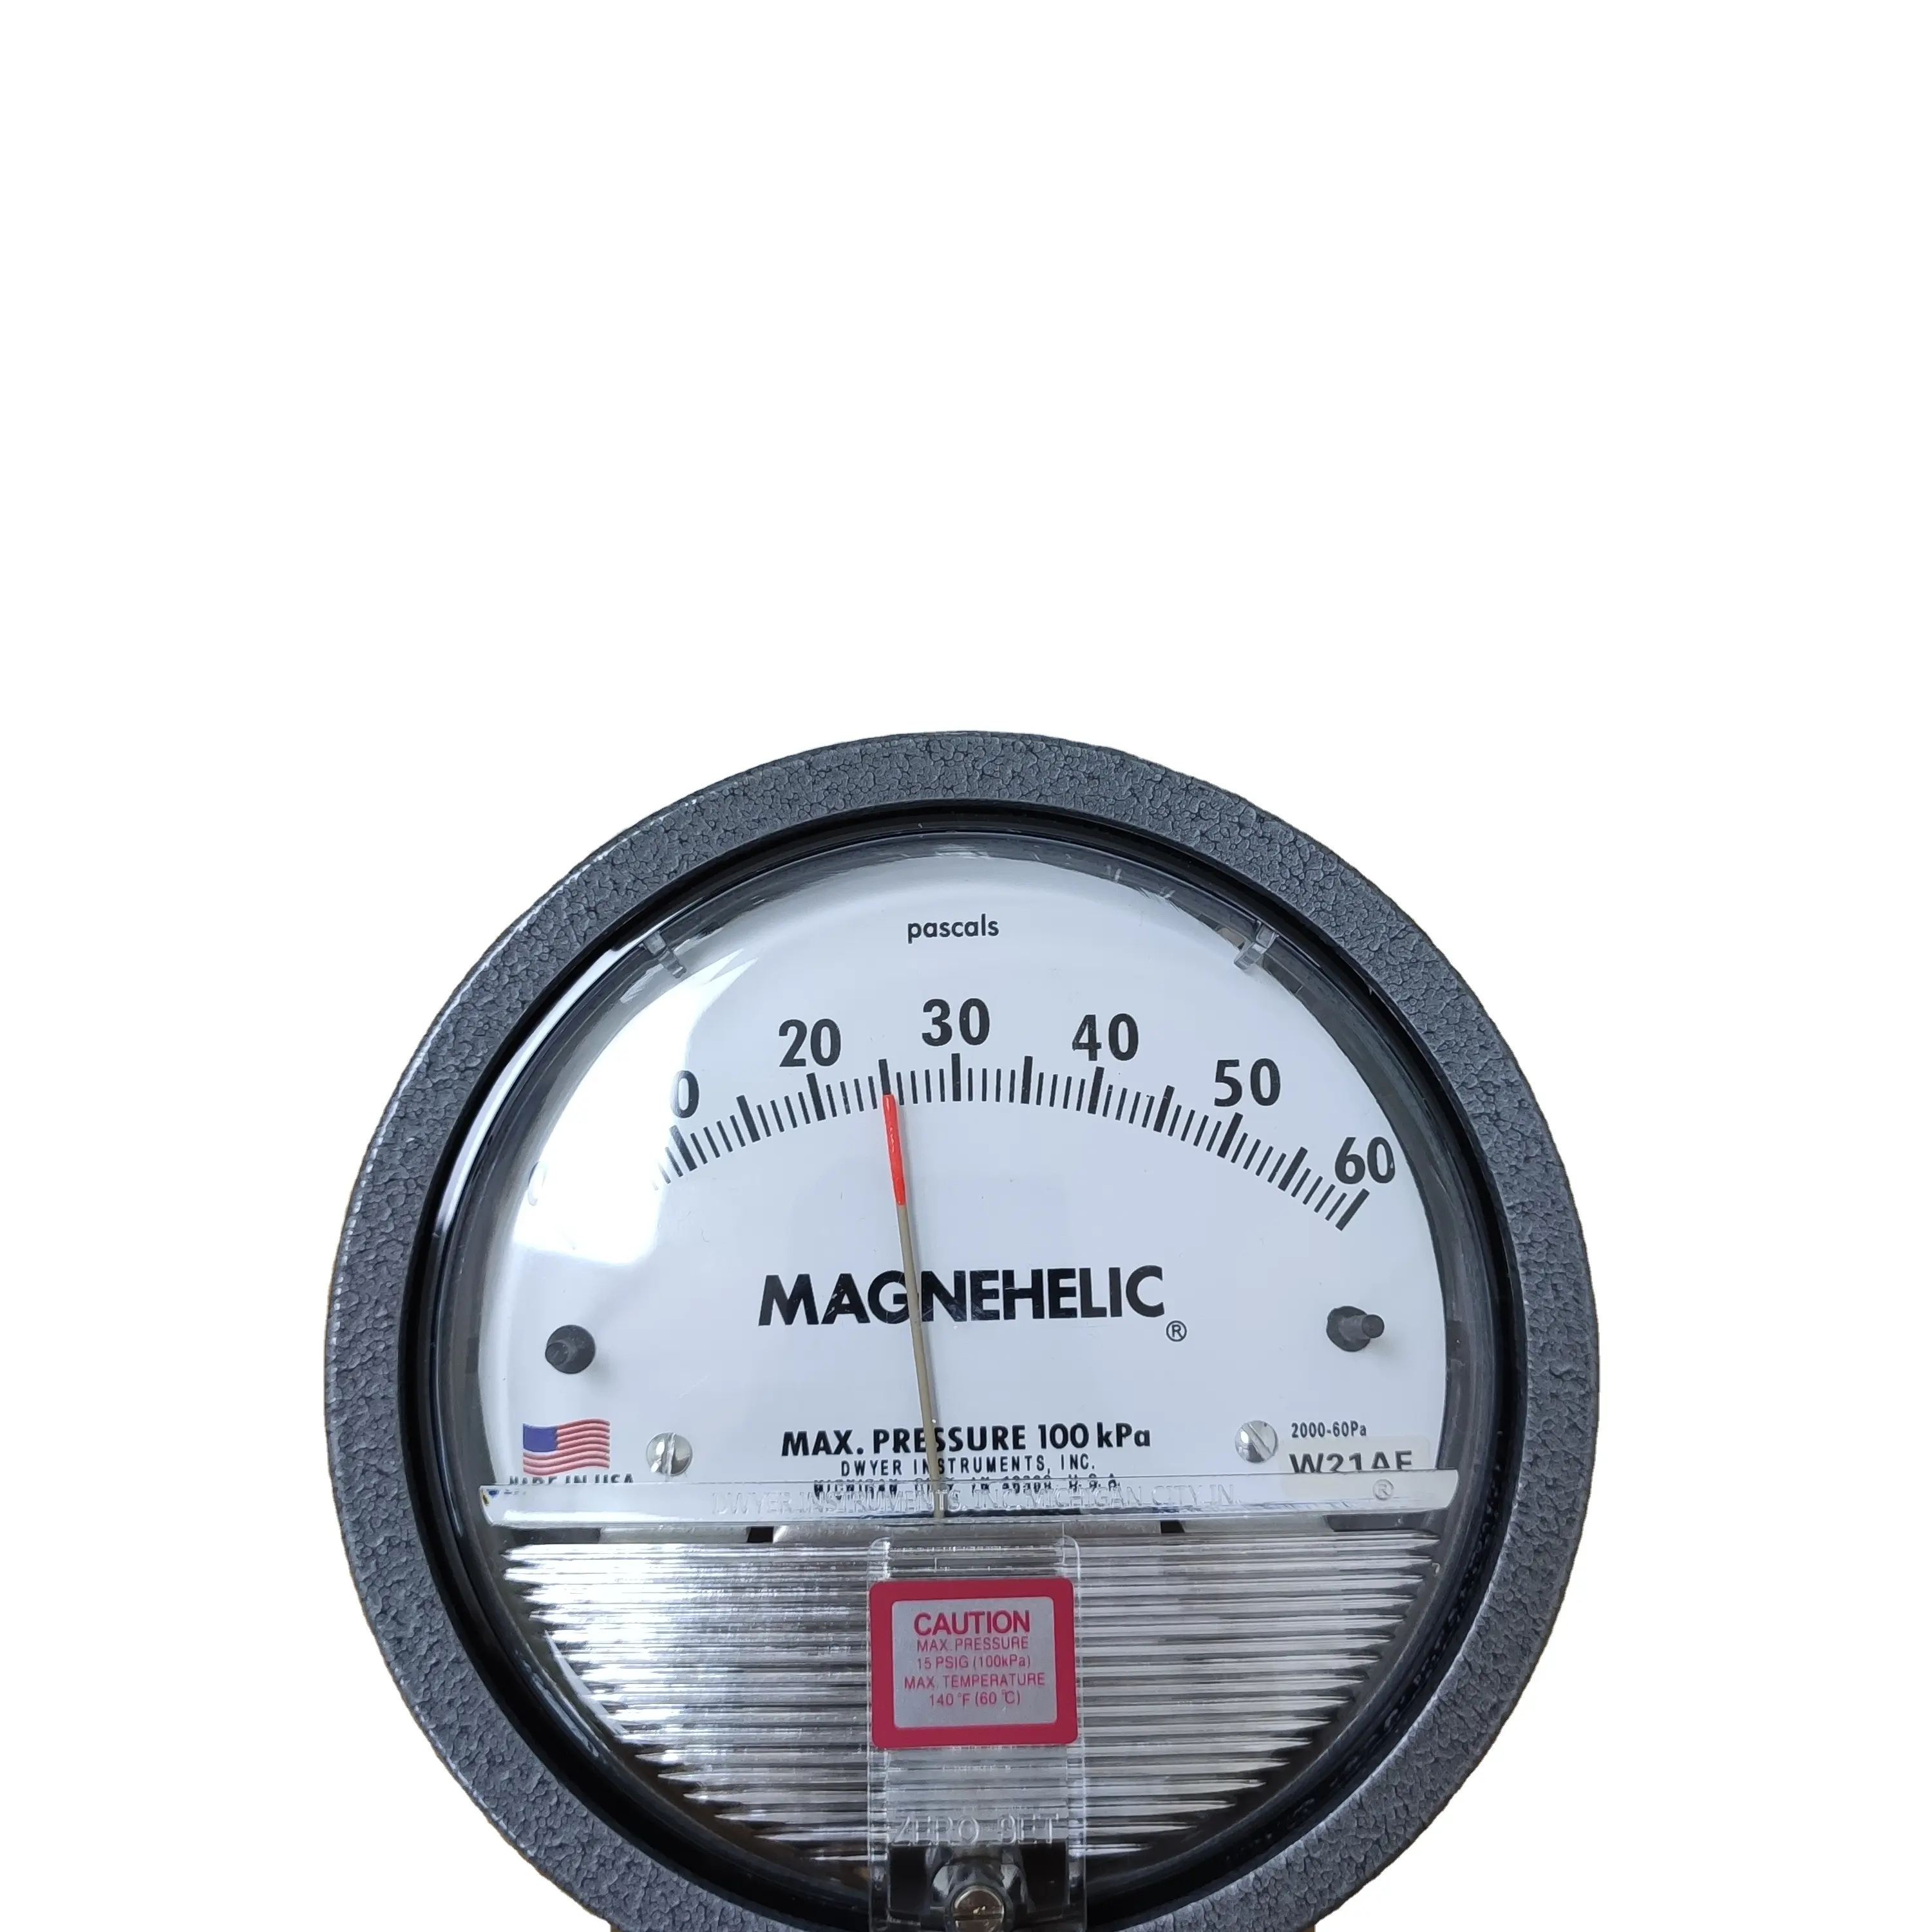 Dwyer Magrfhelic differential pressure gauge 2000 Series 2000-60pa